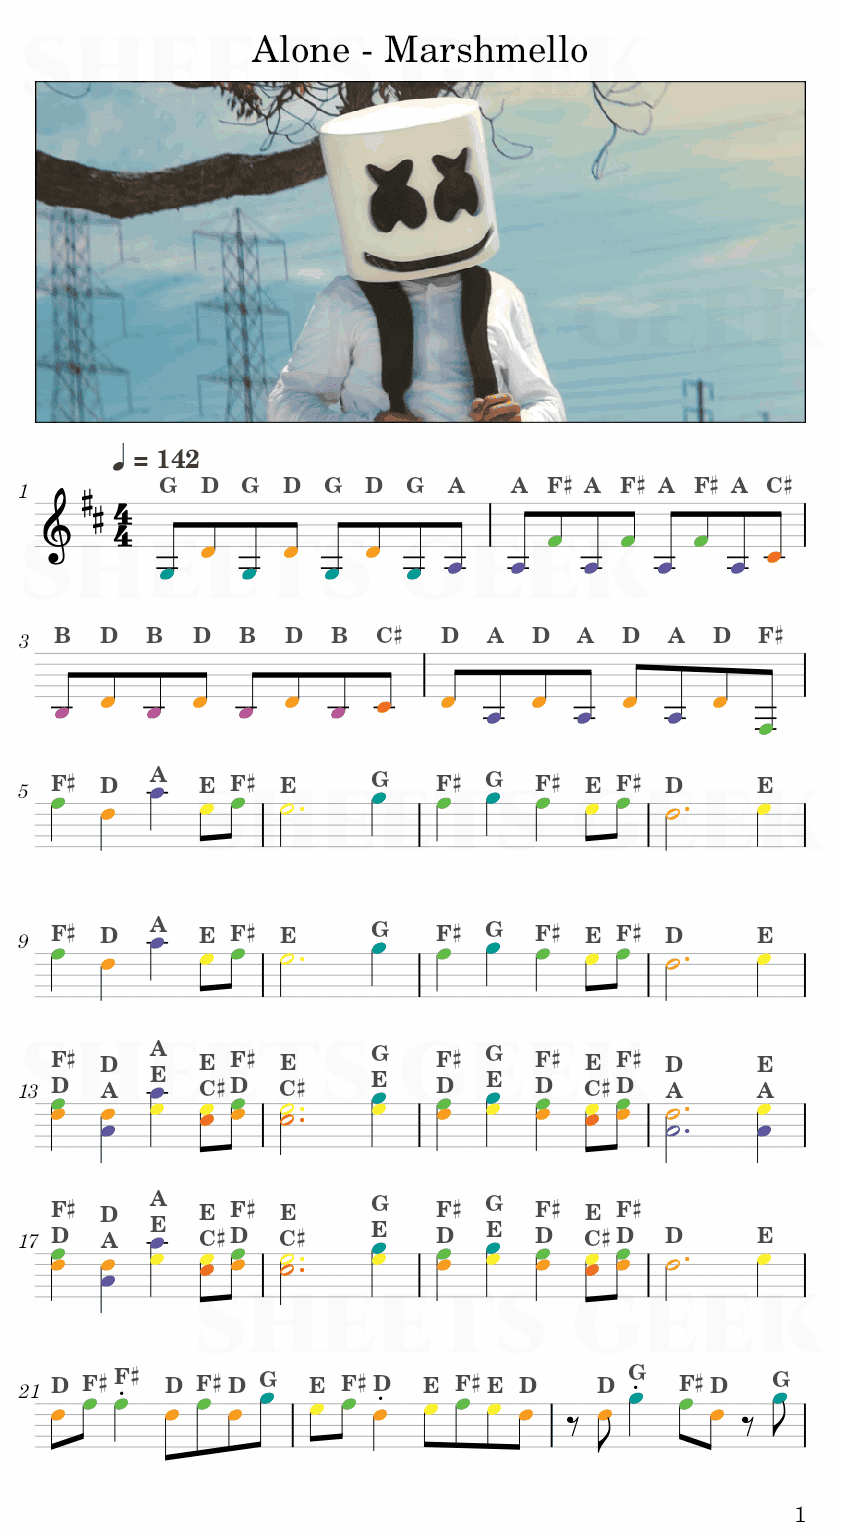 Alone - Marshmello Easy Sheet Music Free for piano, keyboard, flute, violin, sax, cello page 1